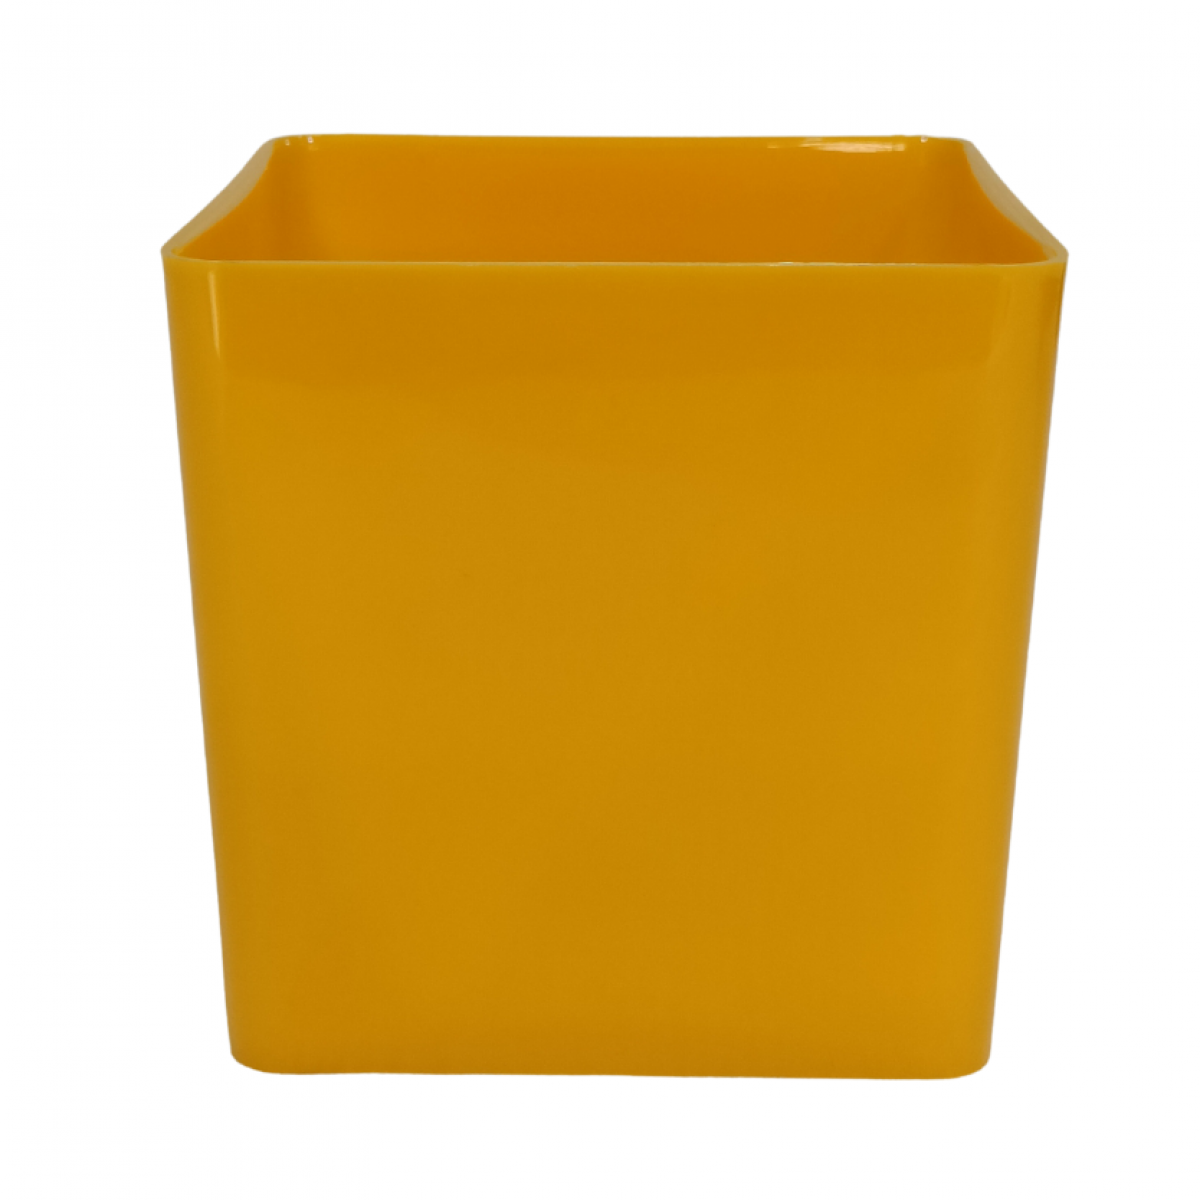 5155 Cube Yellow 13x13x13cm Acrylic Vase - 1 No